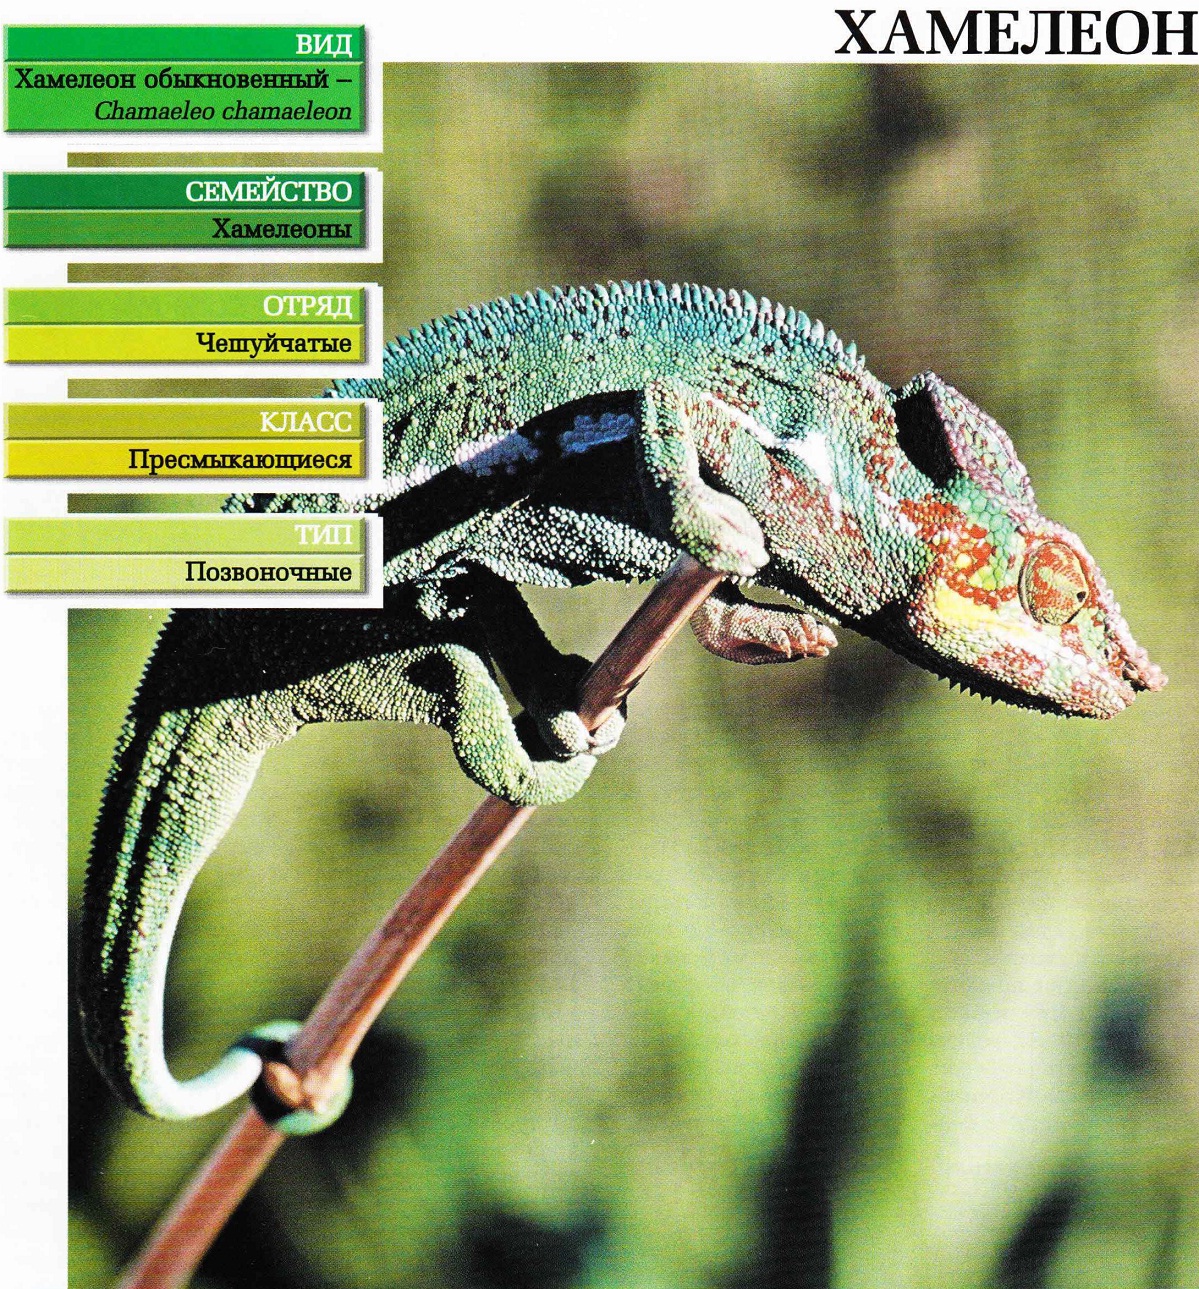 Систематика (научная классификация) хамелеона обыкновенного. Chamaeleo chamaeleon.